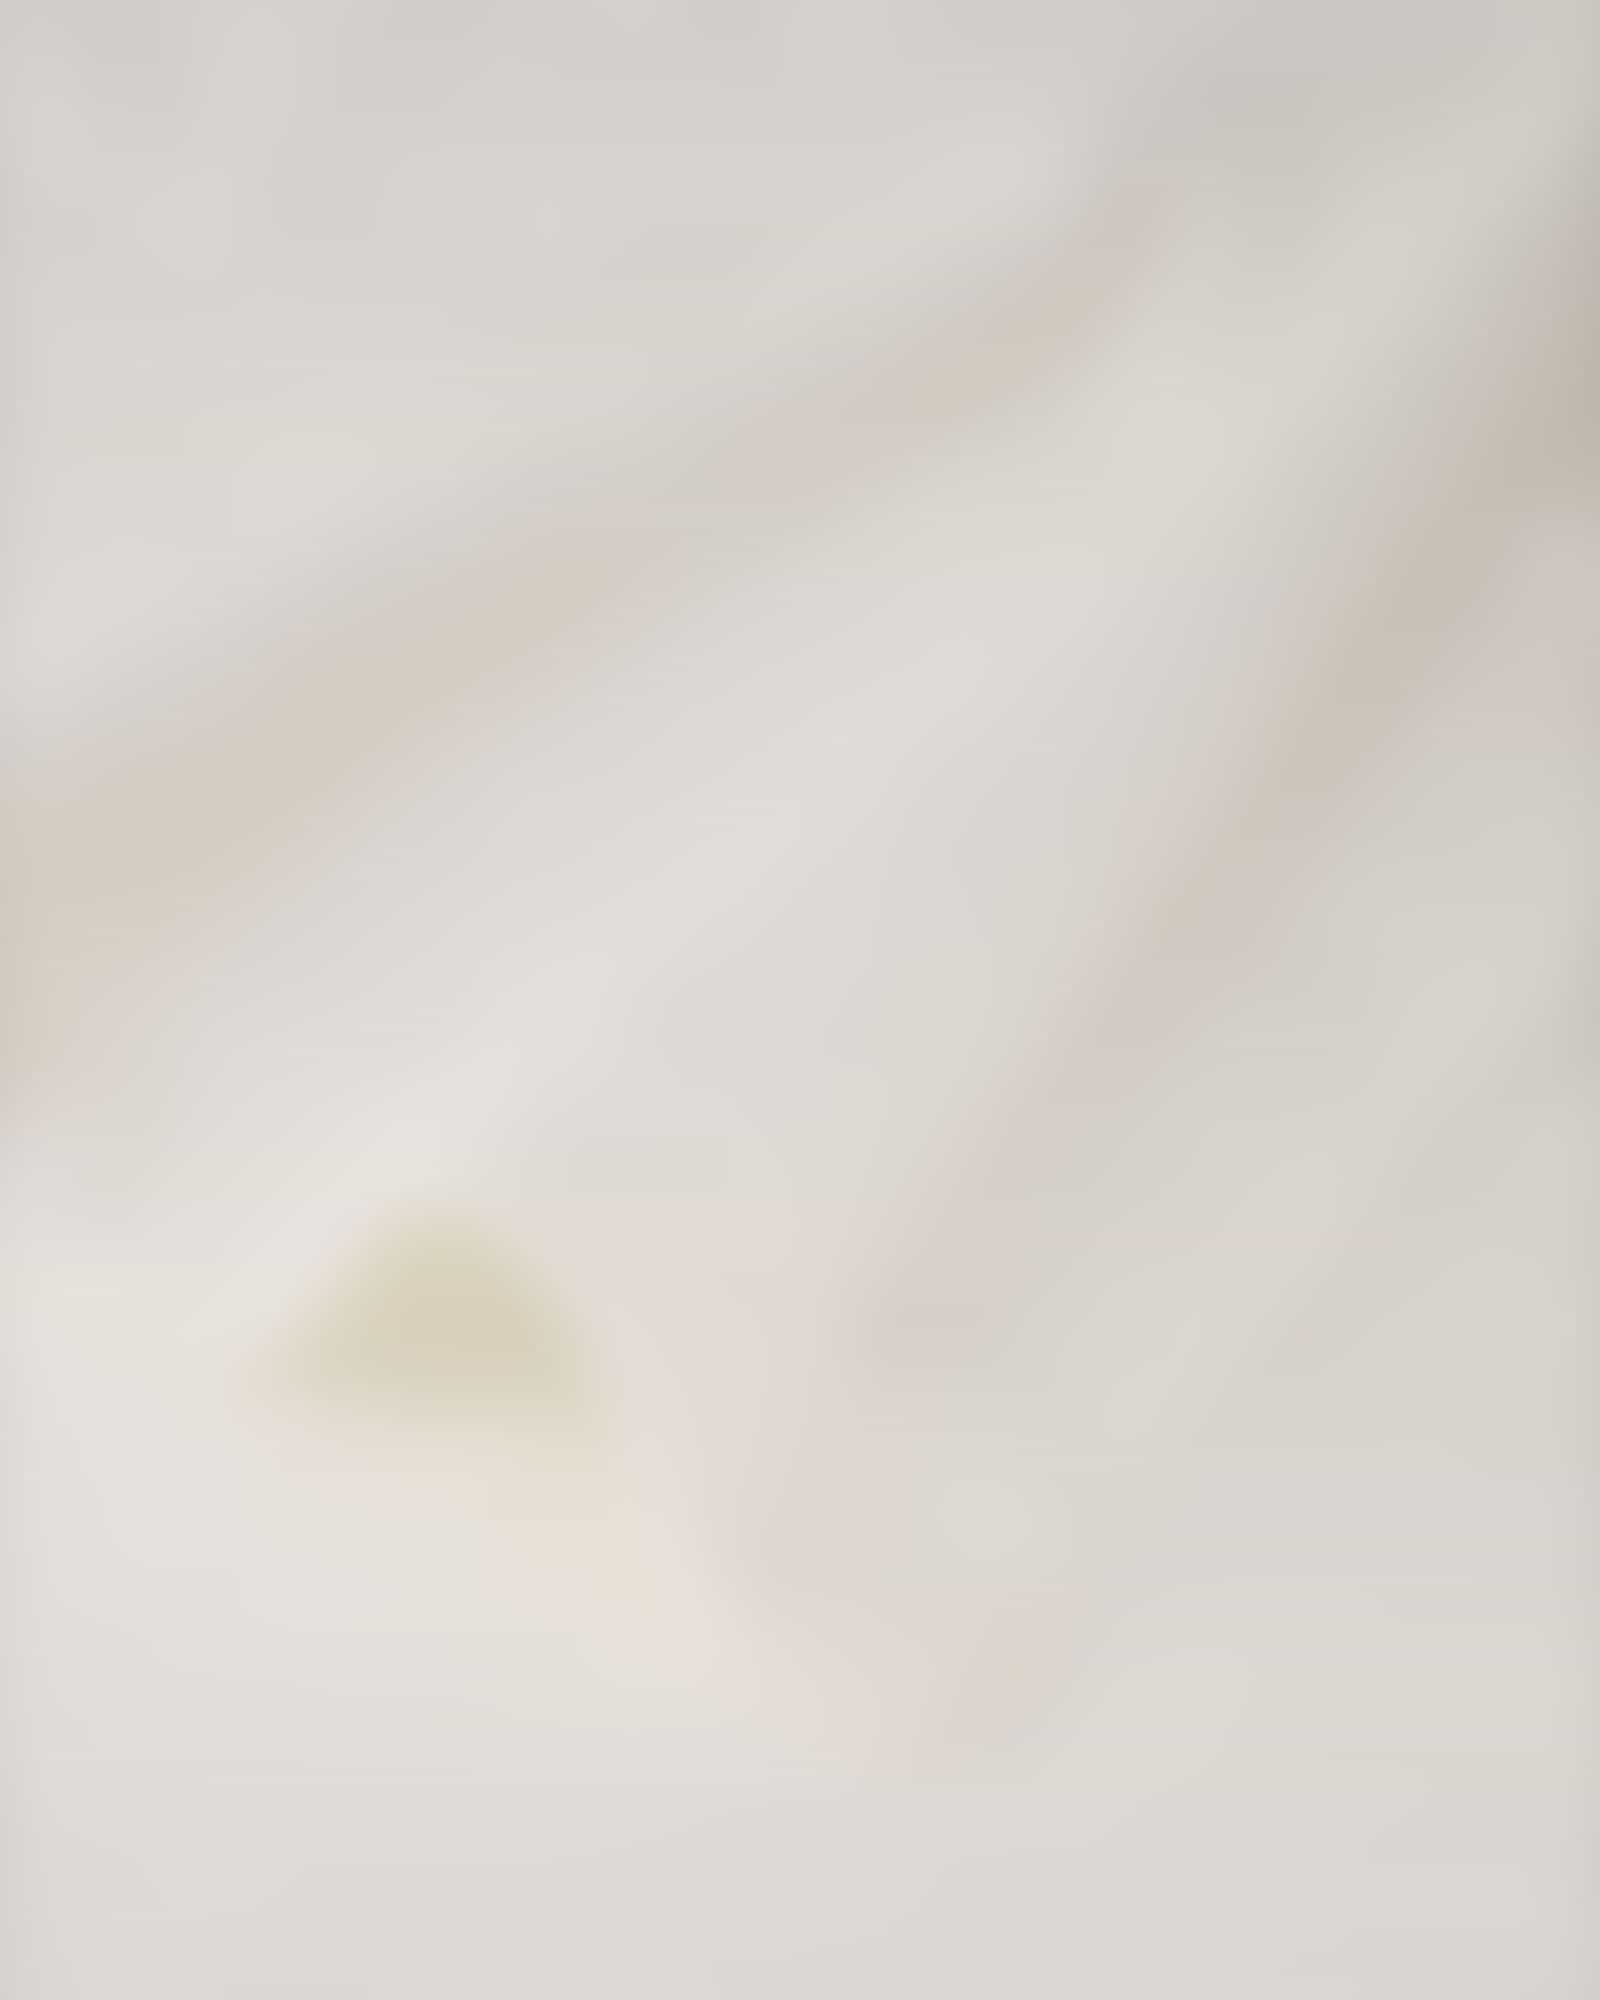 Cawö - Life Style Uni 7007 - Farbe: weiß - 600 - Duschtuch 70x140 cm